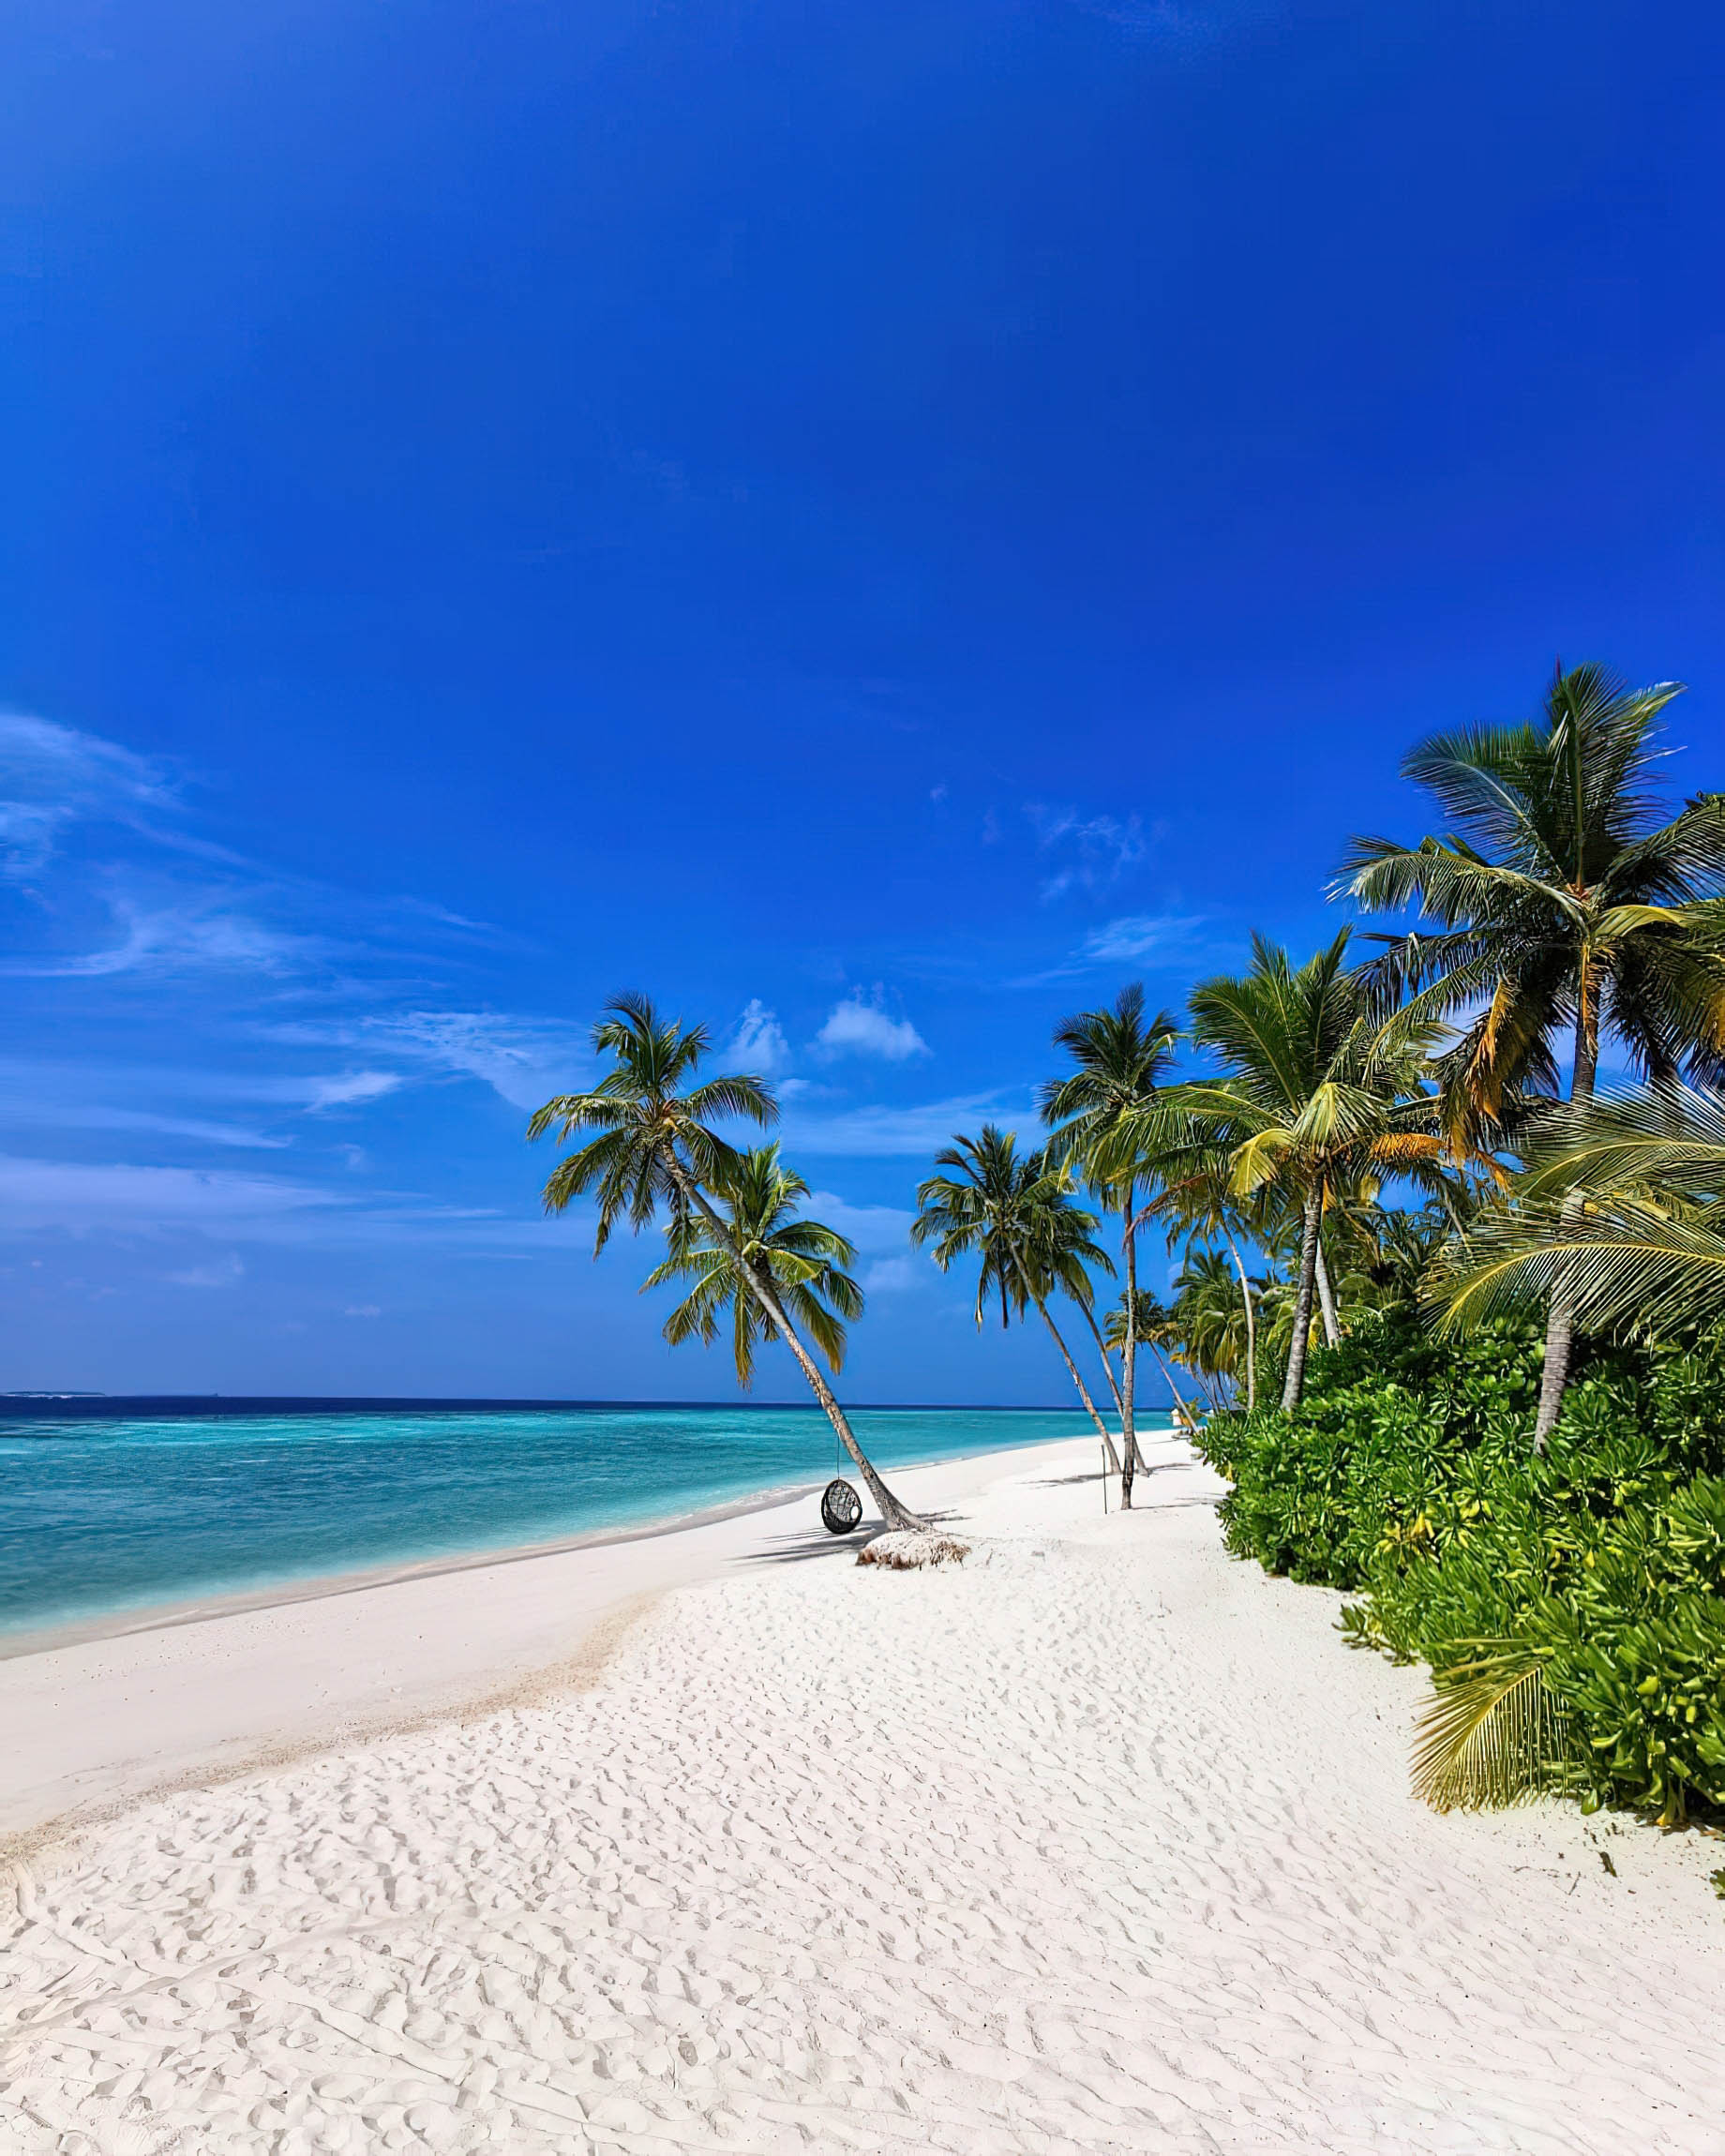 Baglioni Resort Maldives – Maagau Island, Rinbudhoo, Maldives – Beach Palm Tree Hanging Basket Chair